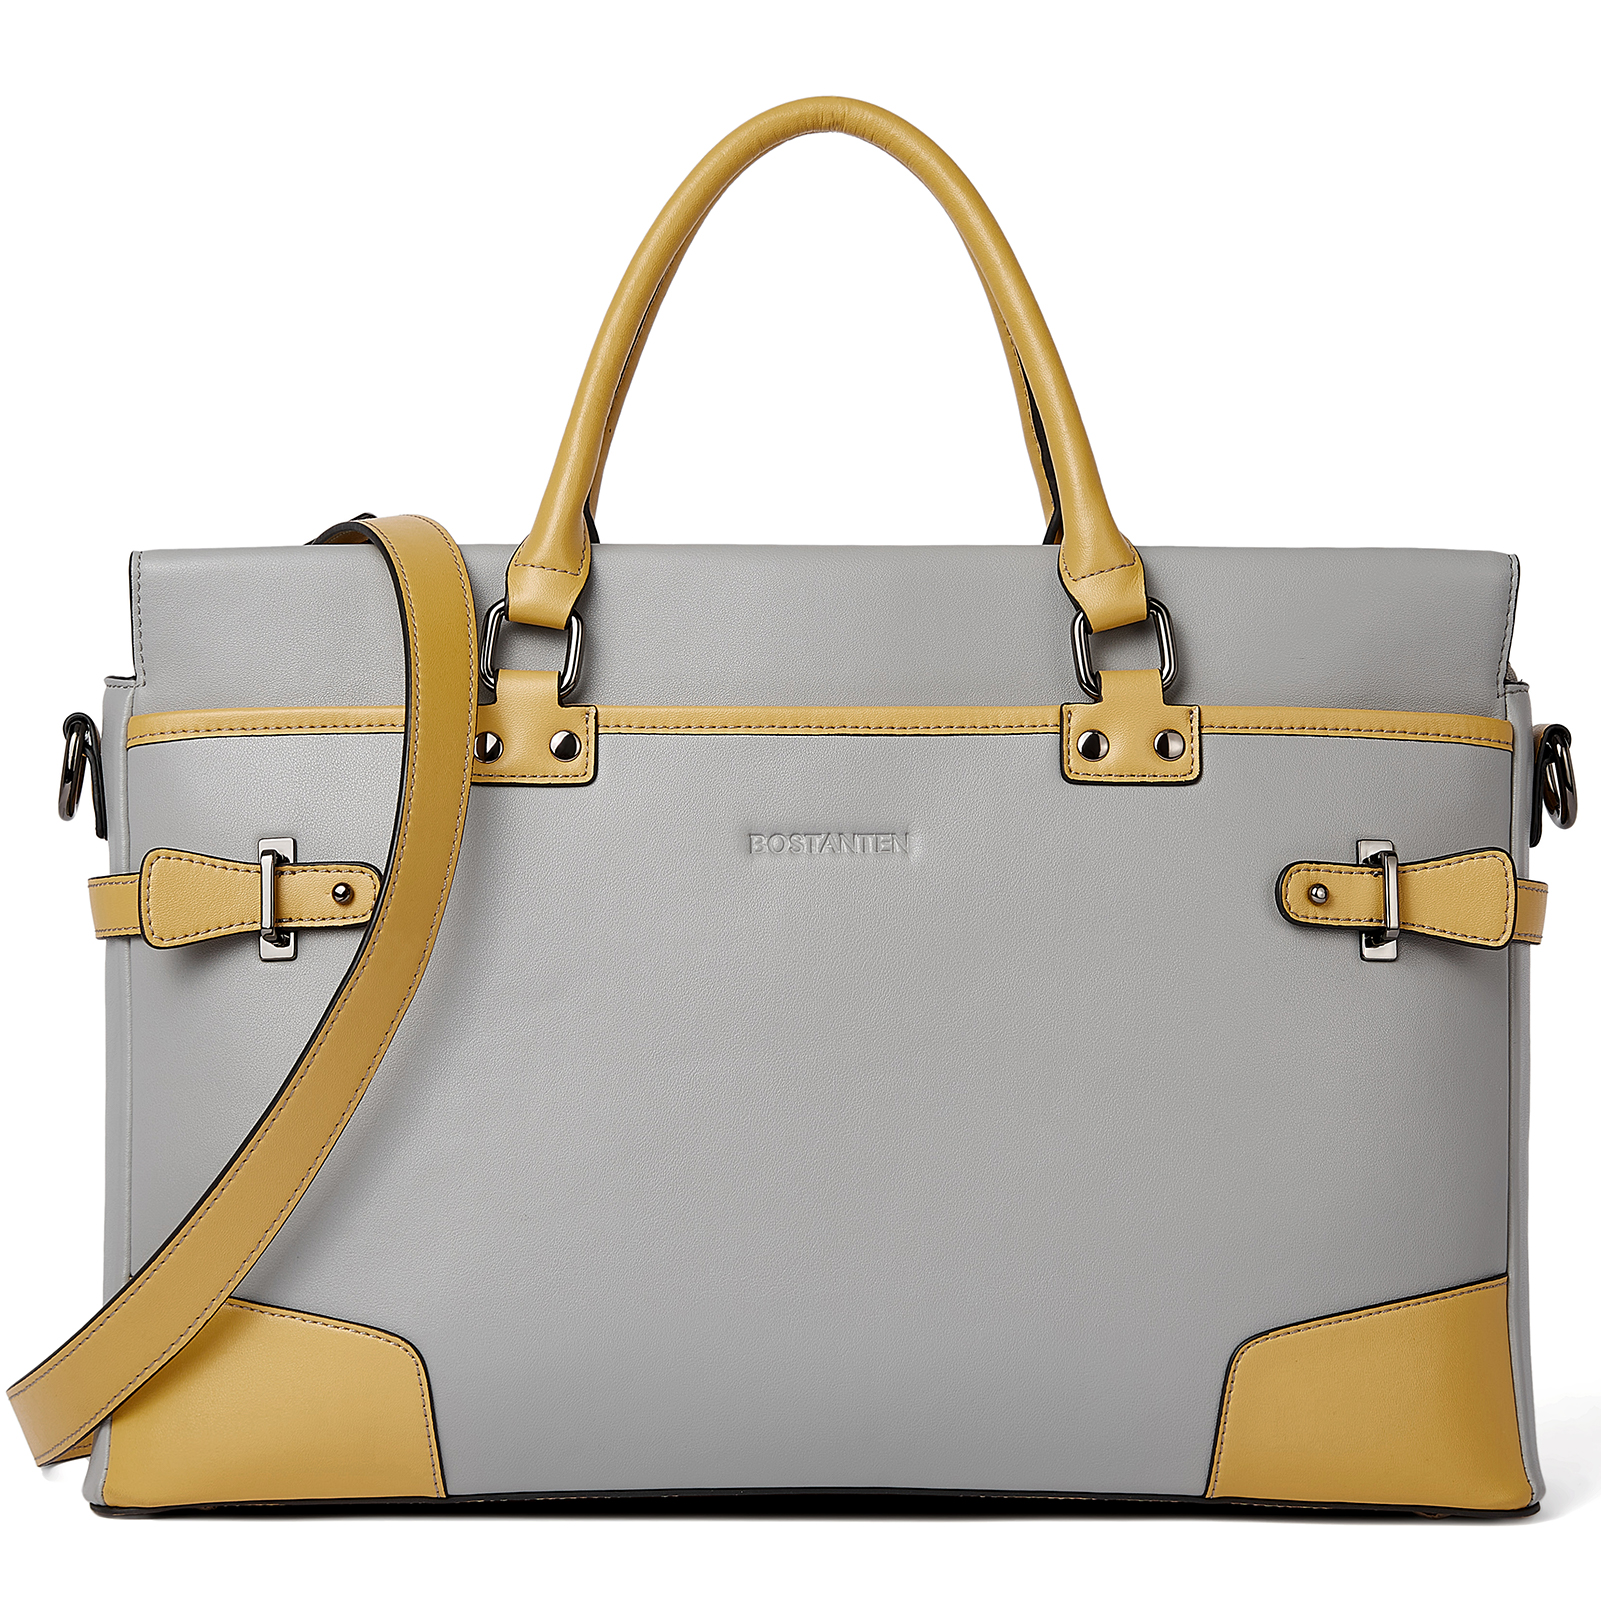 BOSTANTEN Leather Briefcase Messenger Satchel Bags Laptop Handbags 